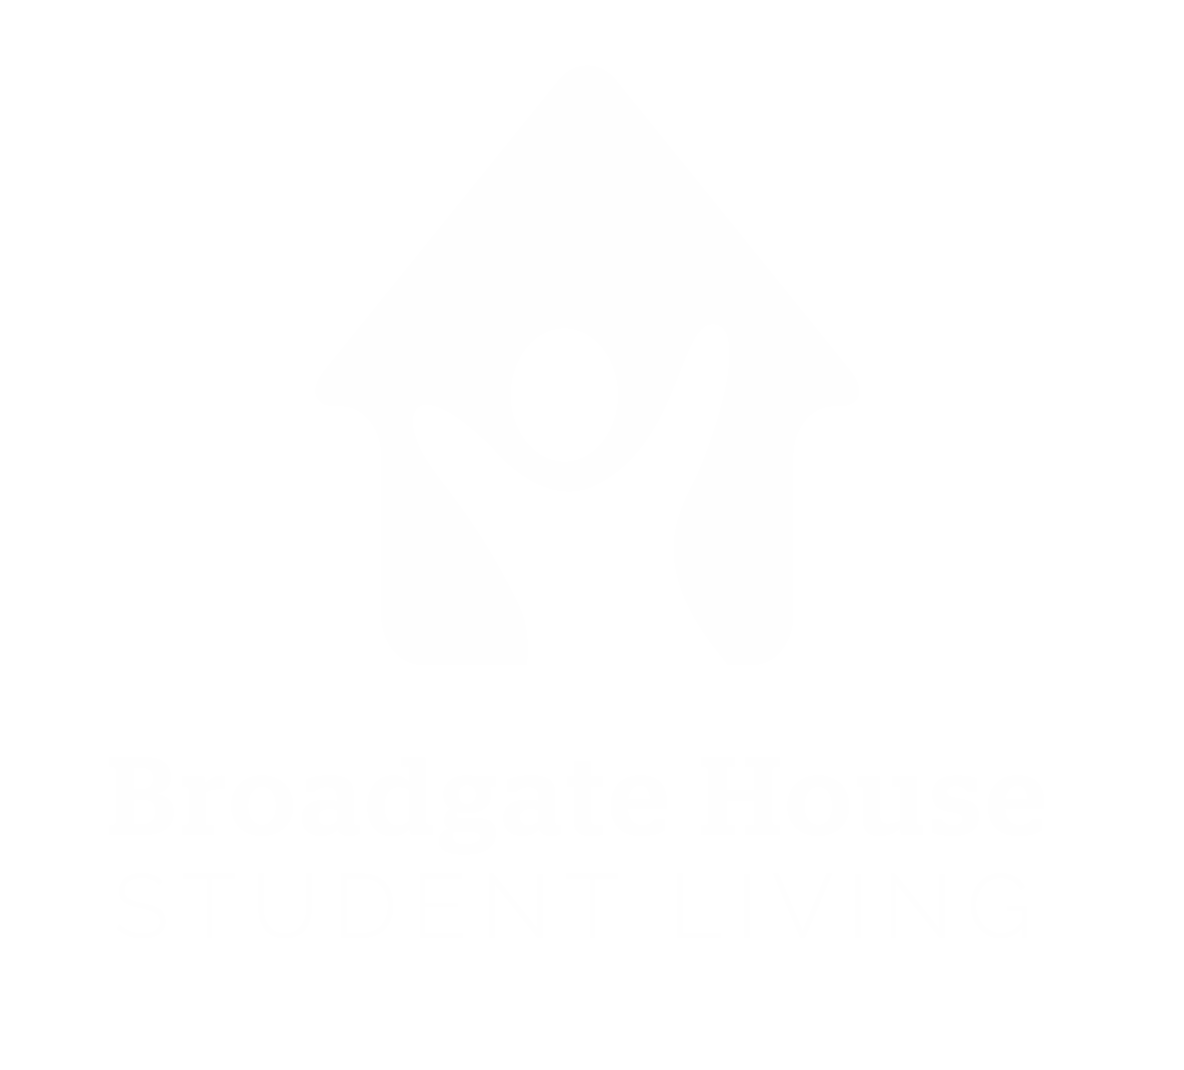 Broadgate House